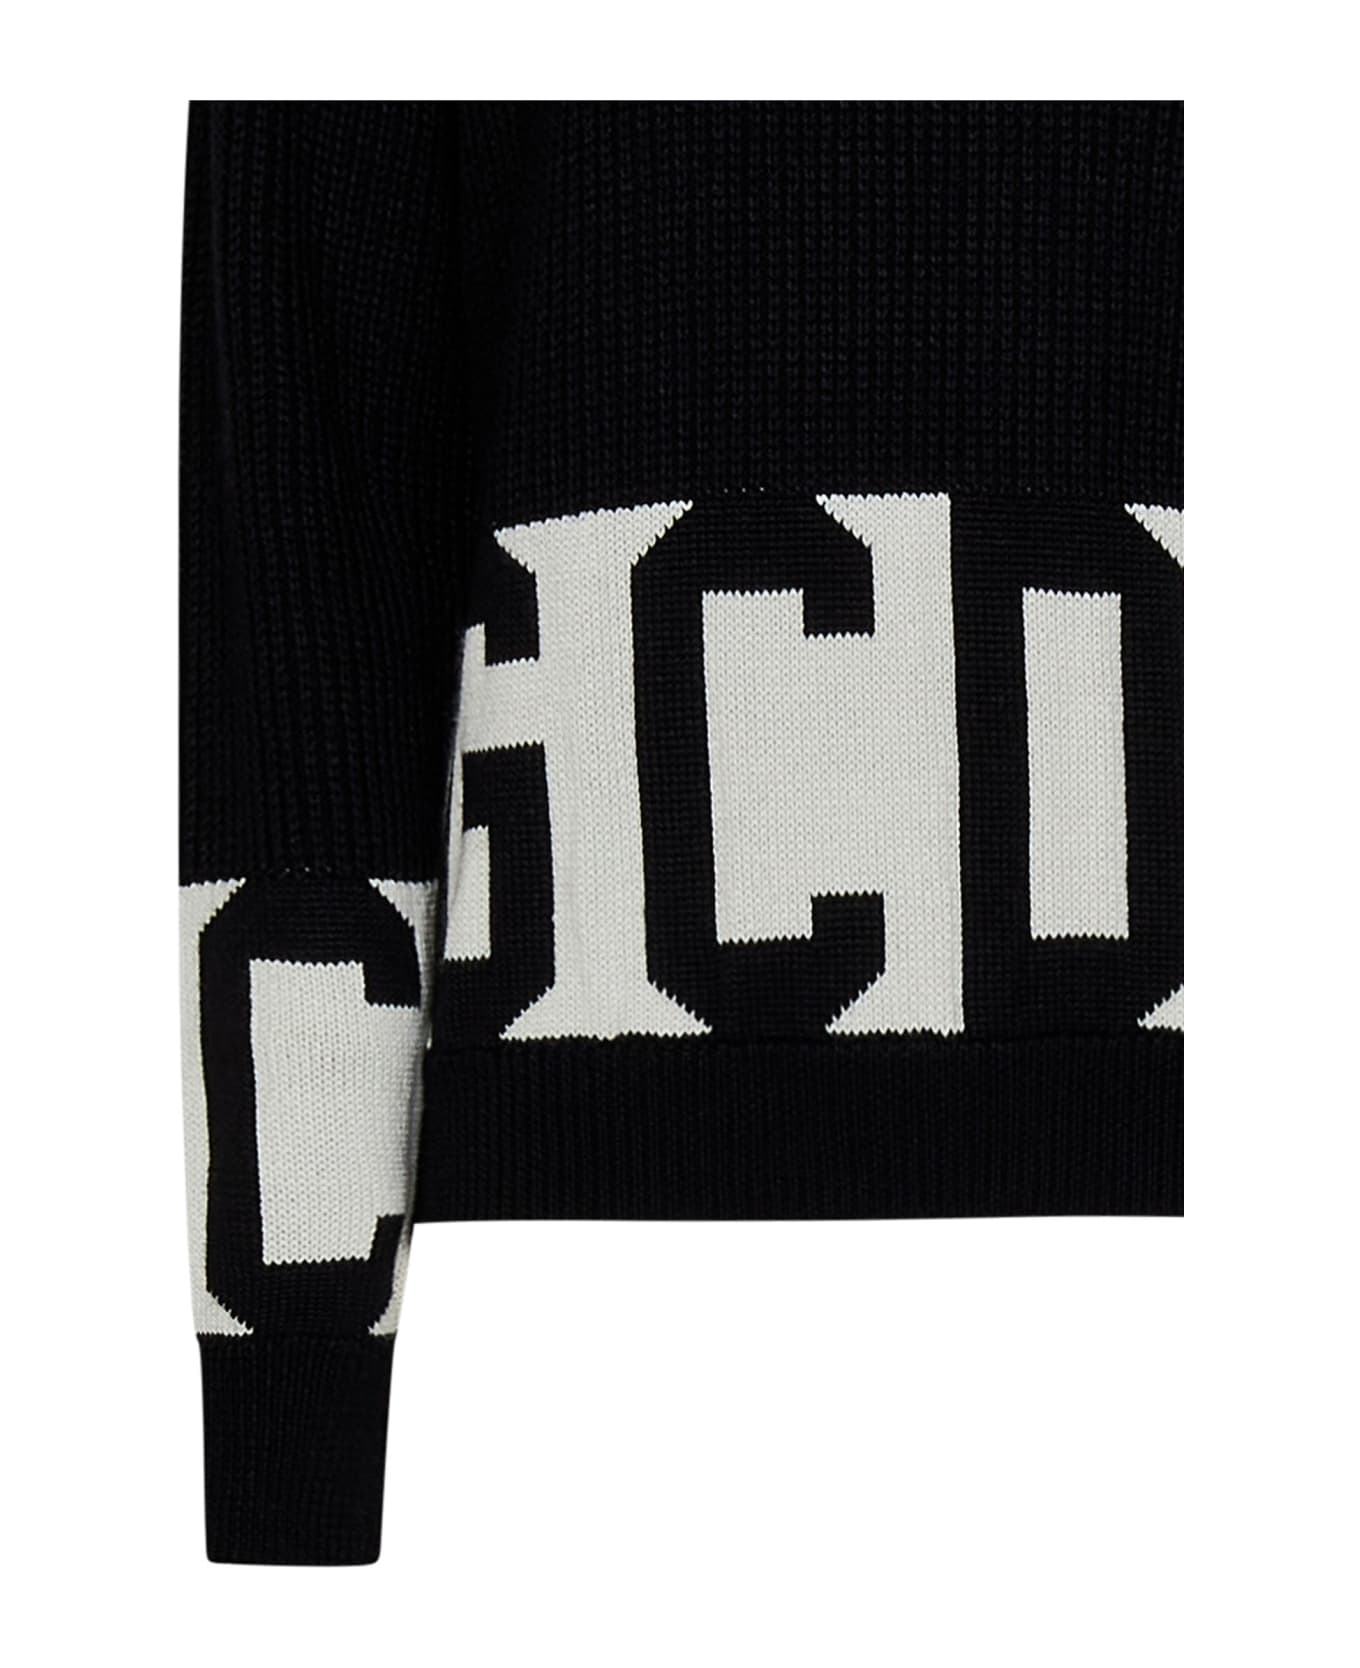 GCDS Sweater - Black